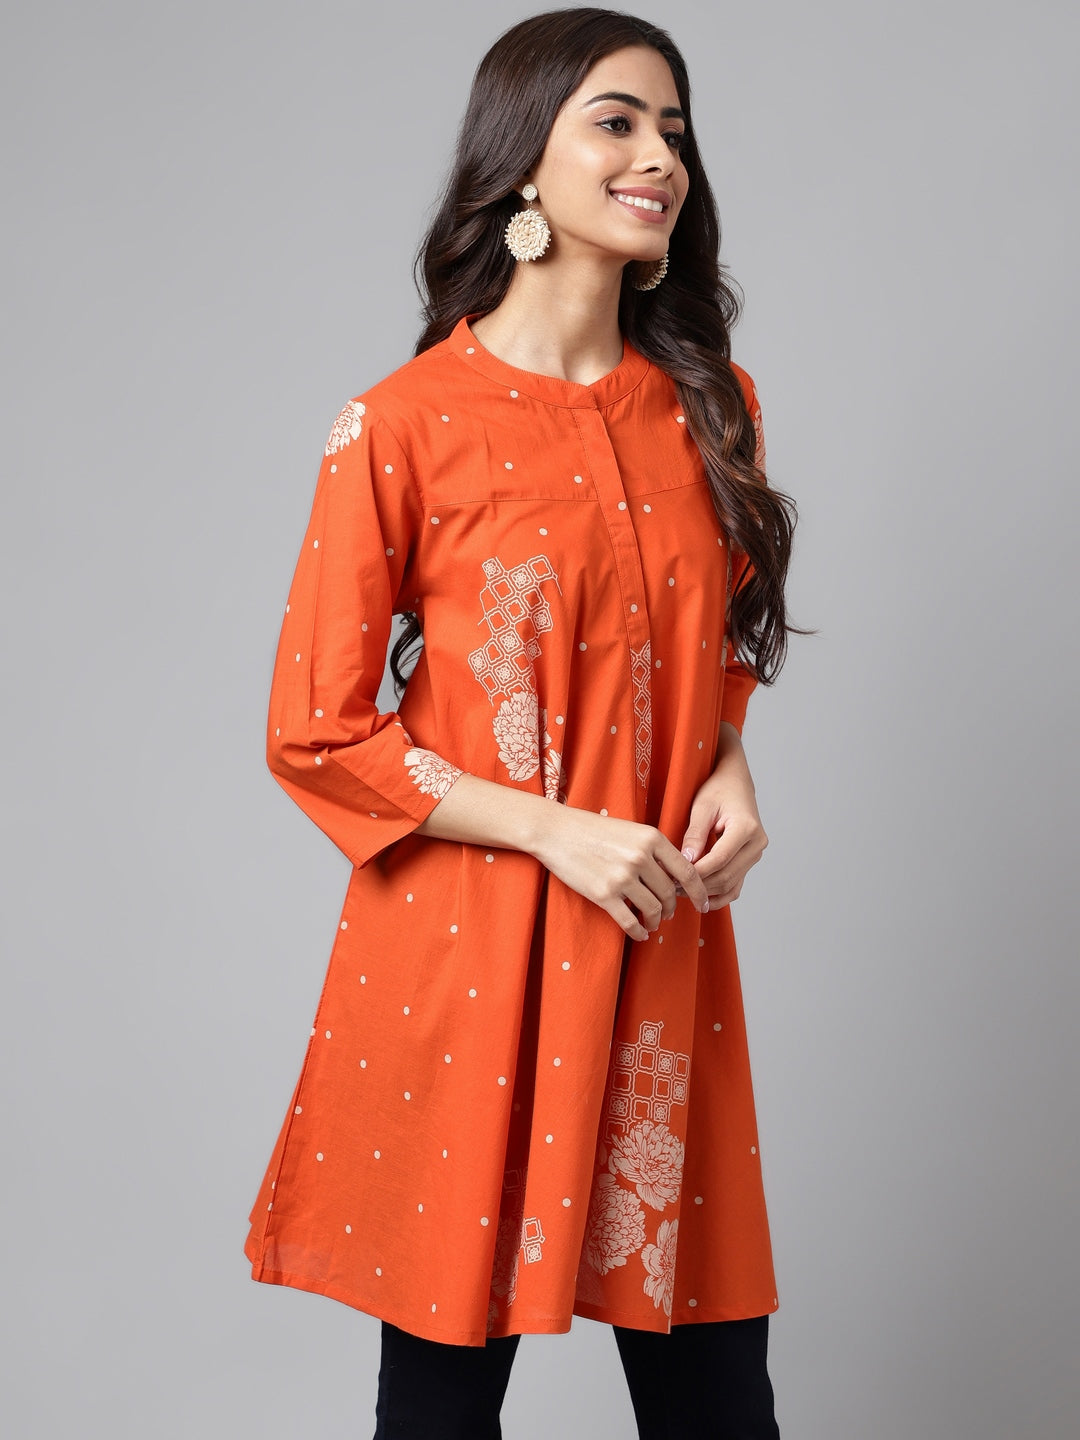 Women's Floral Printed Orange Cotton Tunics - Janasya